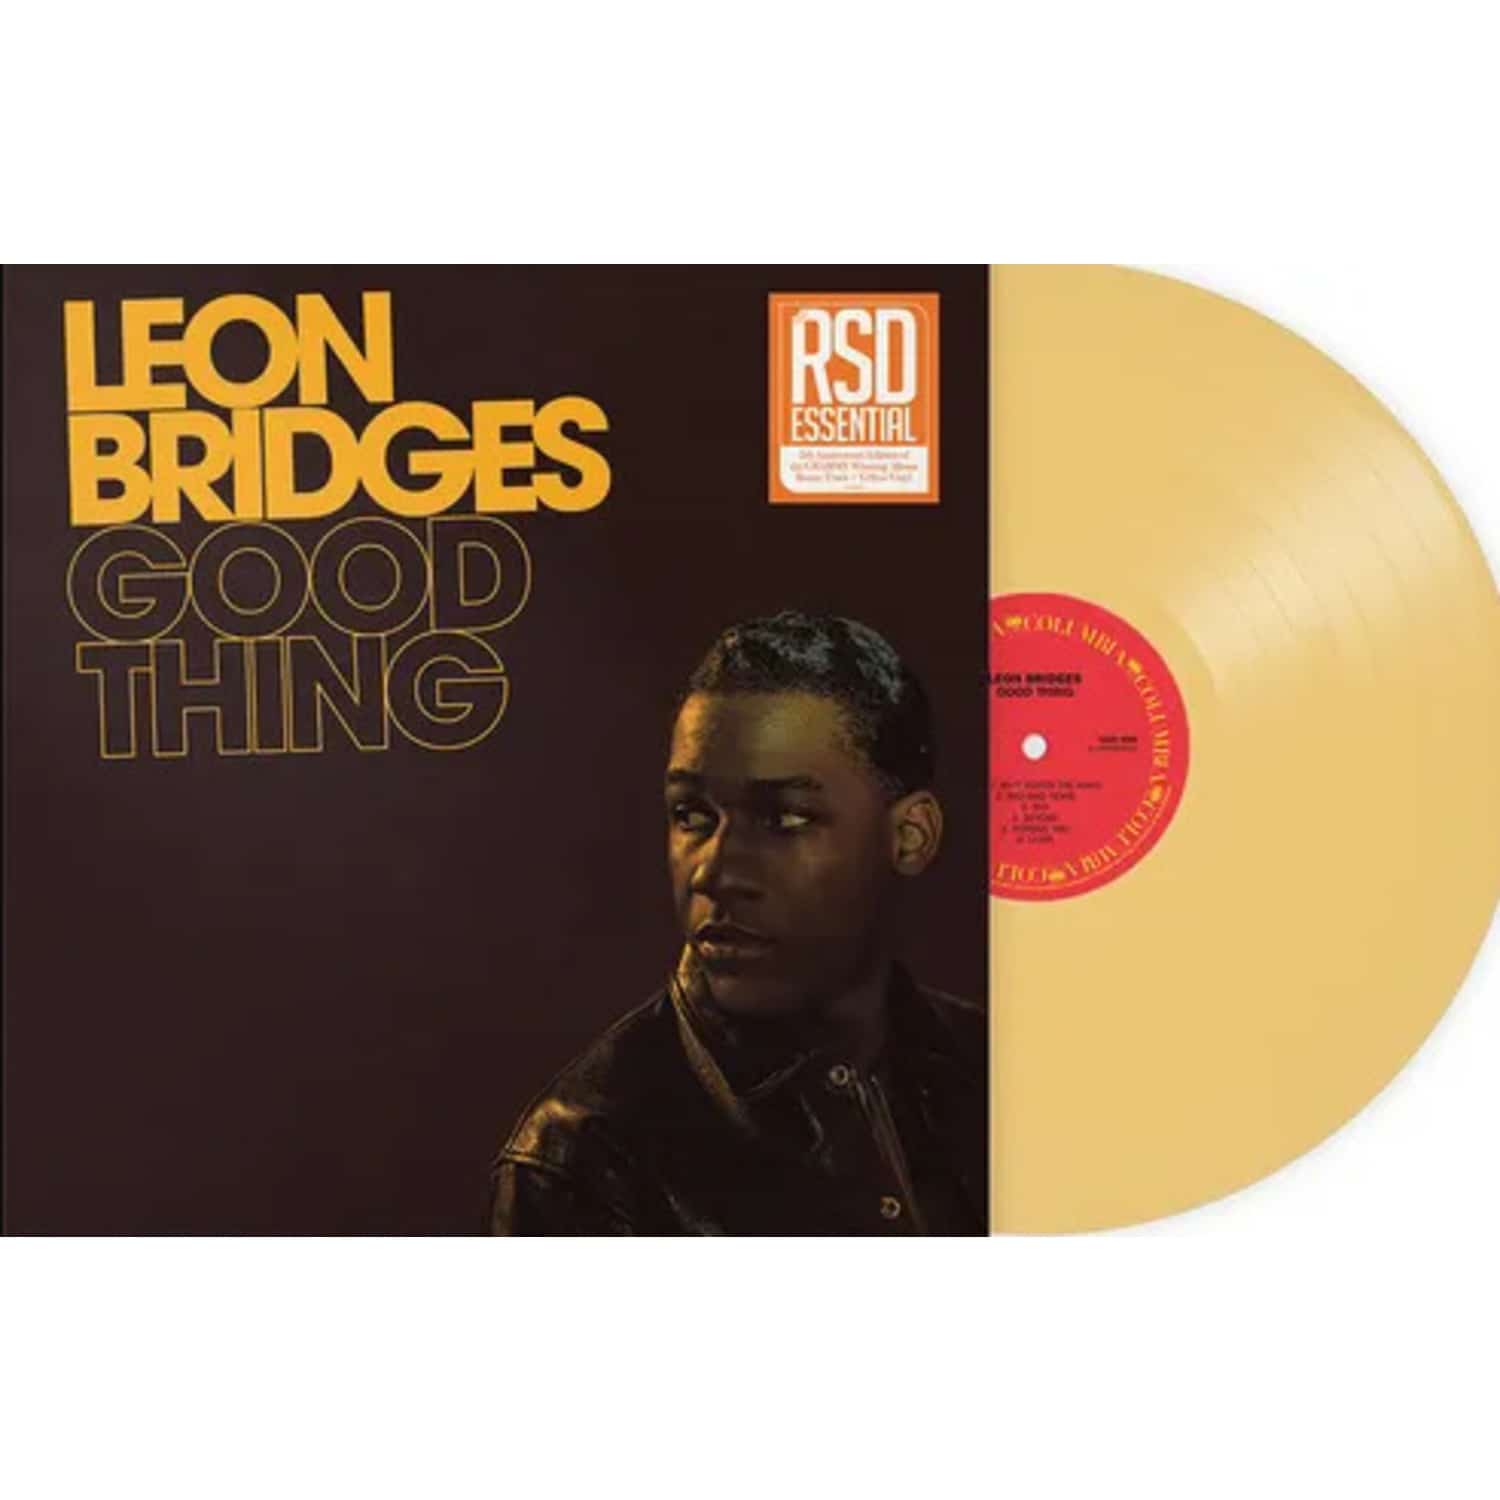 Leon Bridges - GOOD THING 